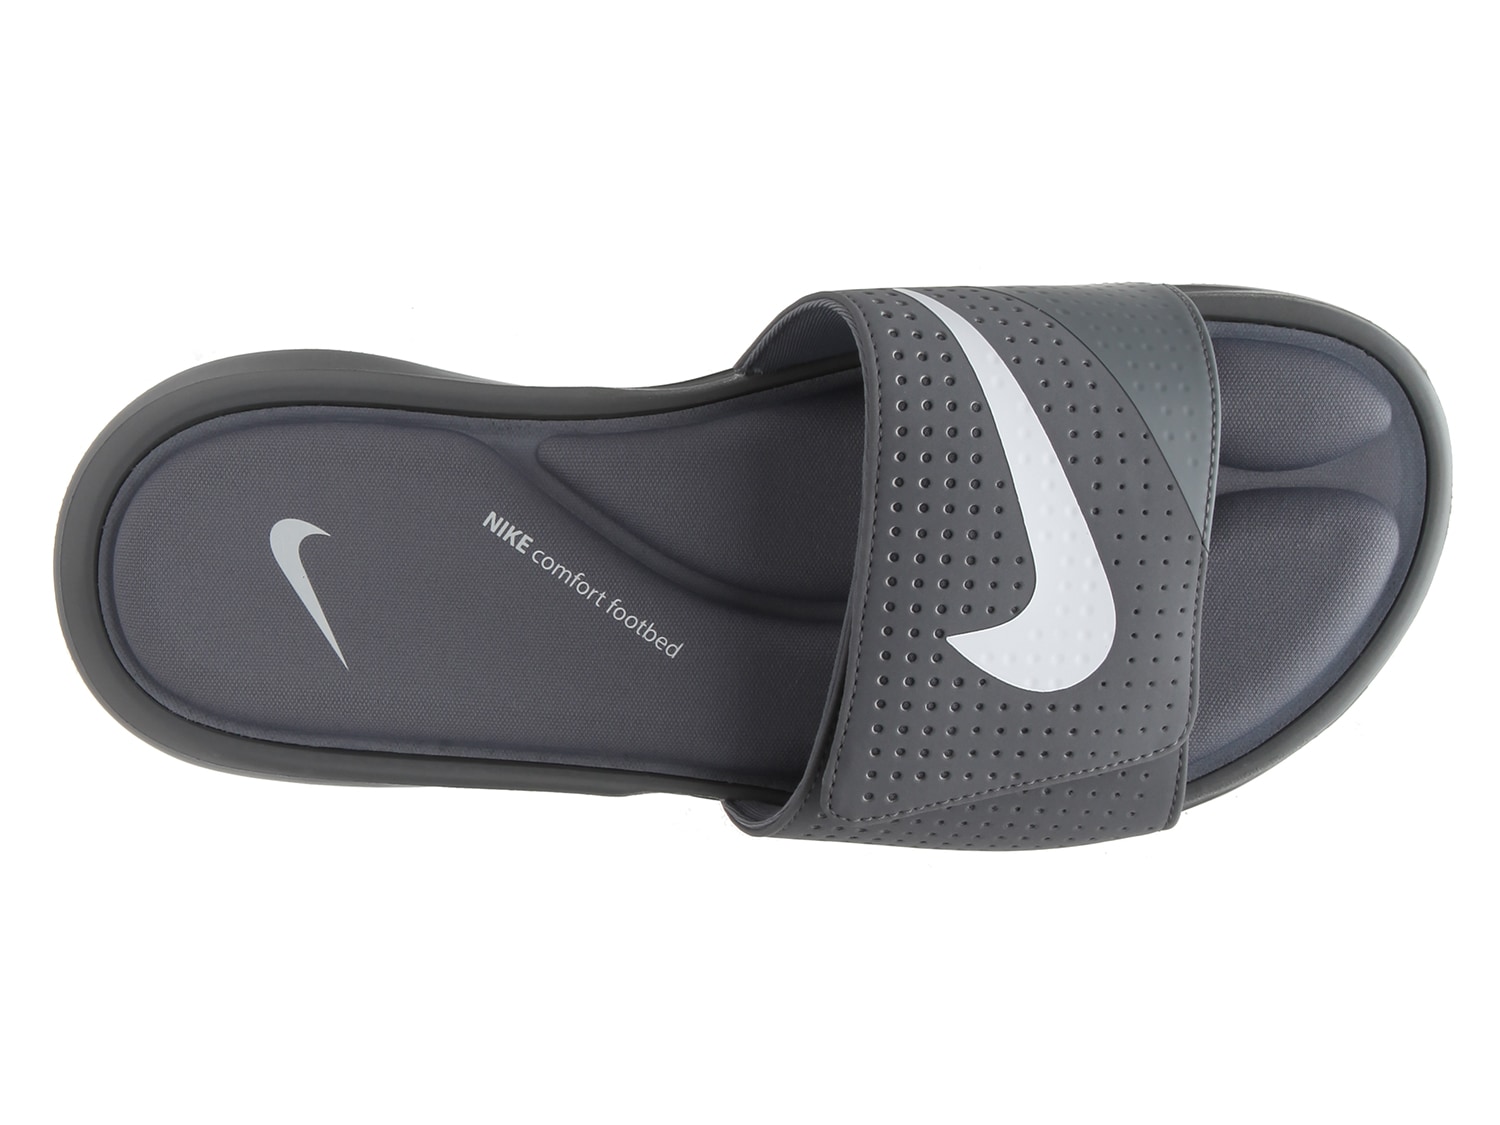 nike men's ultra comfort slide sandals